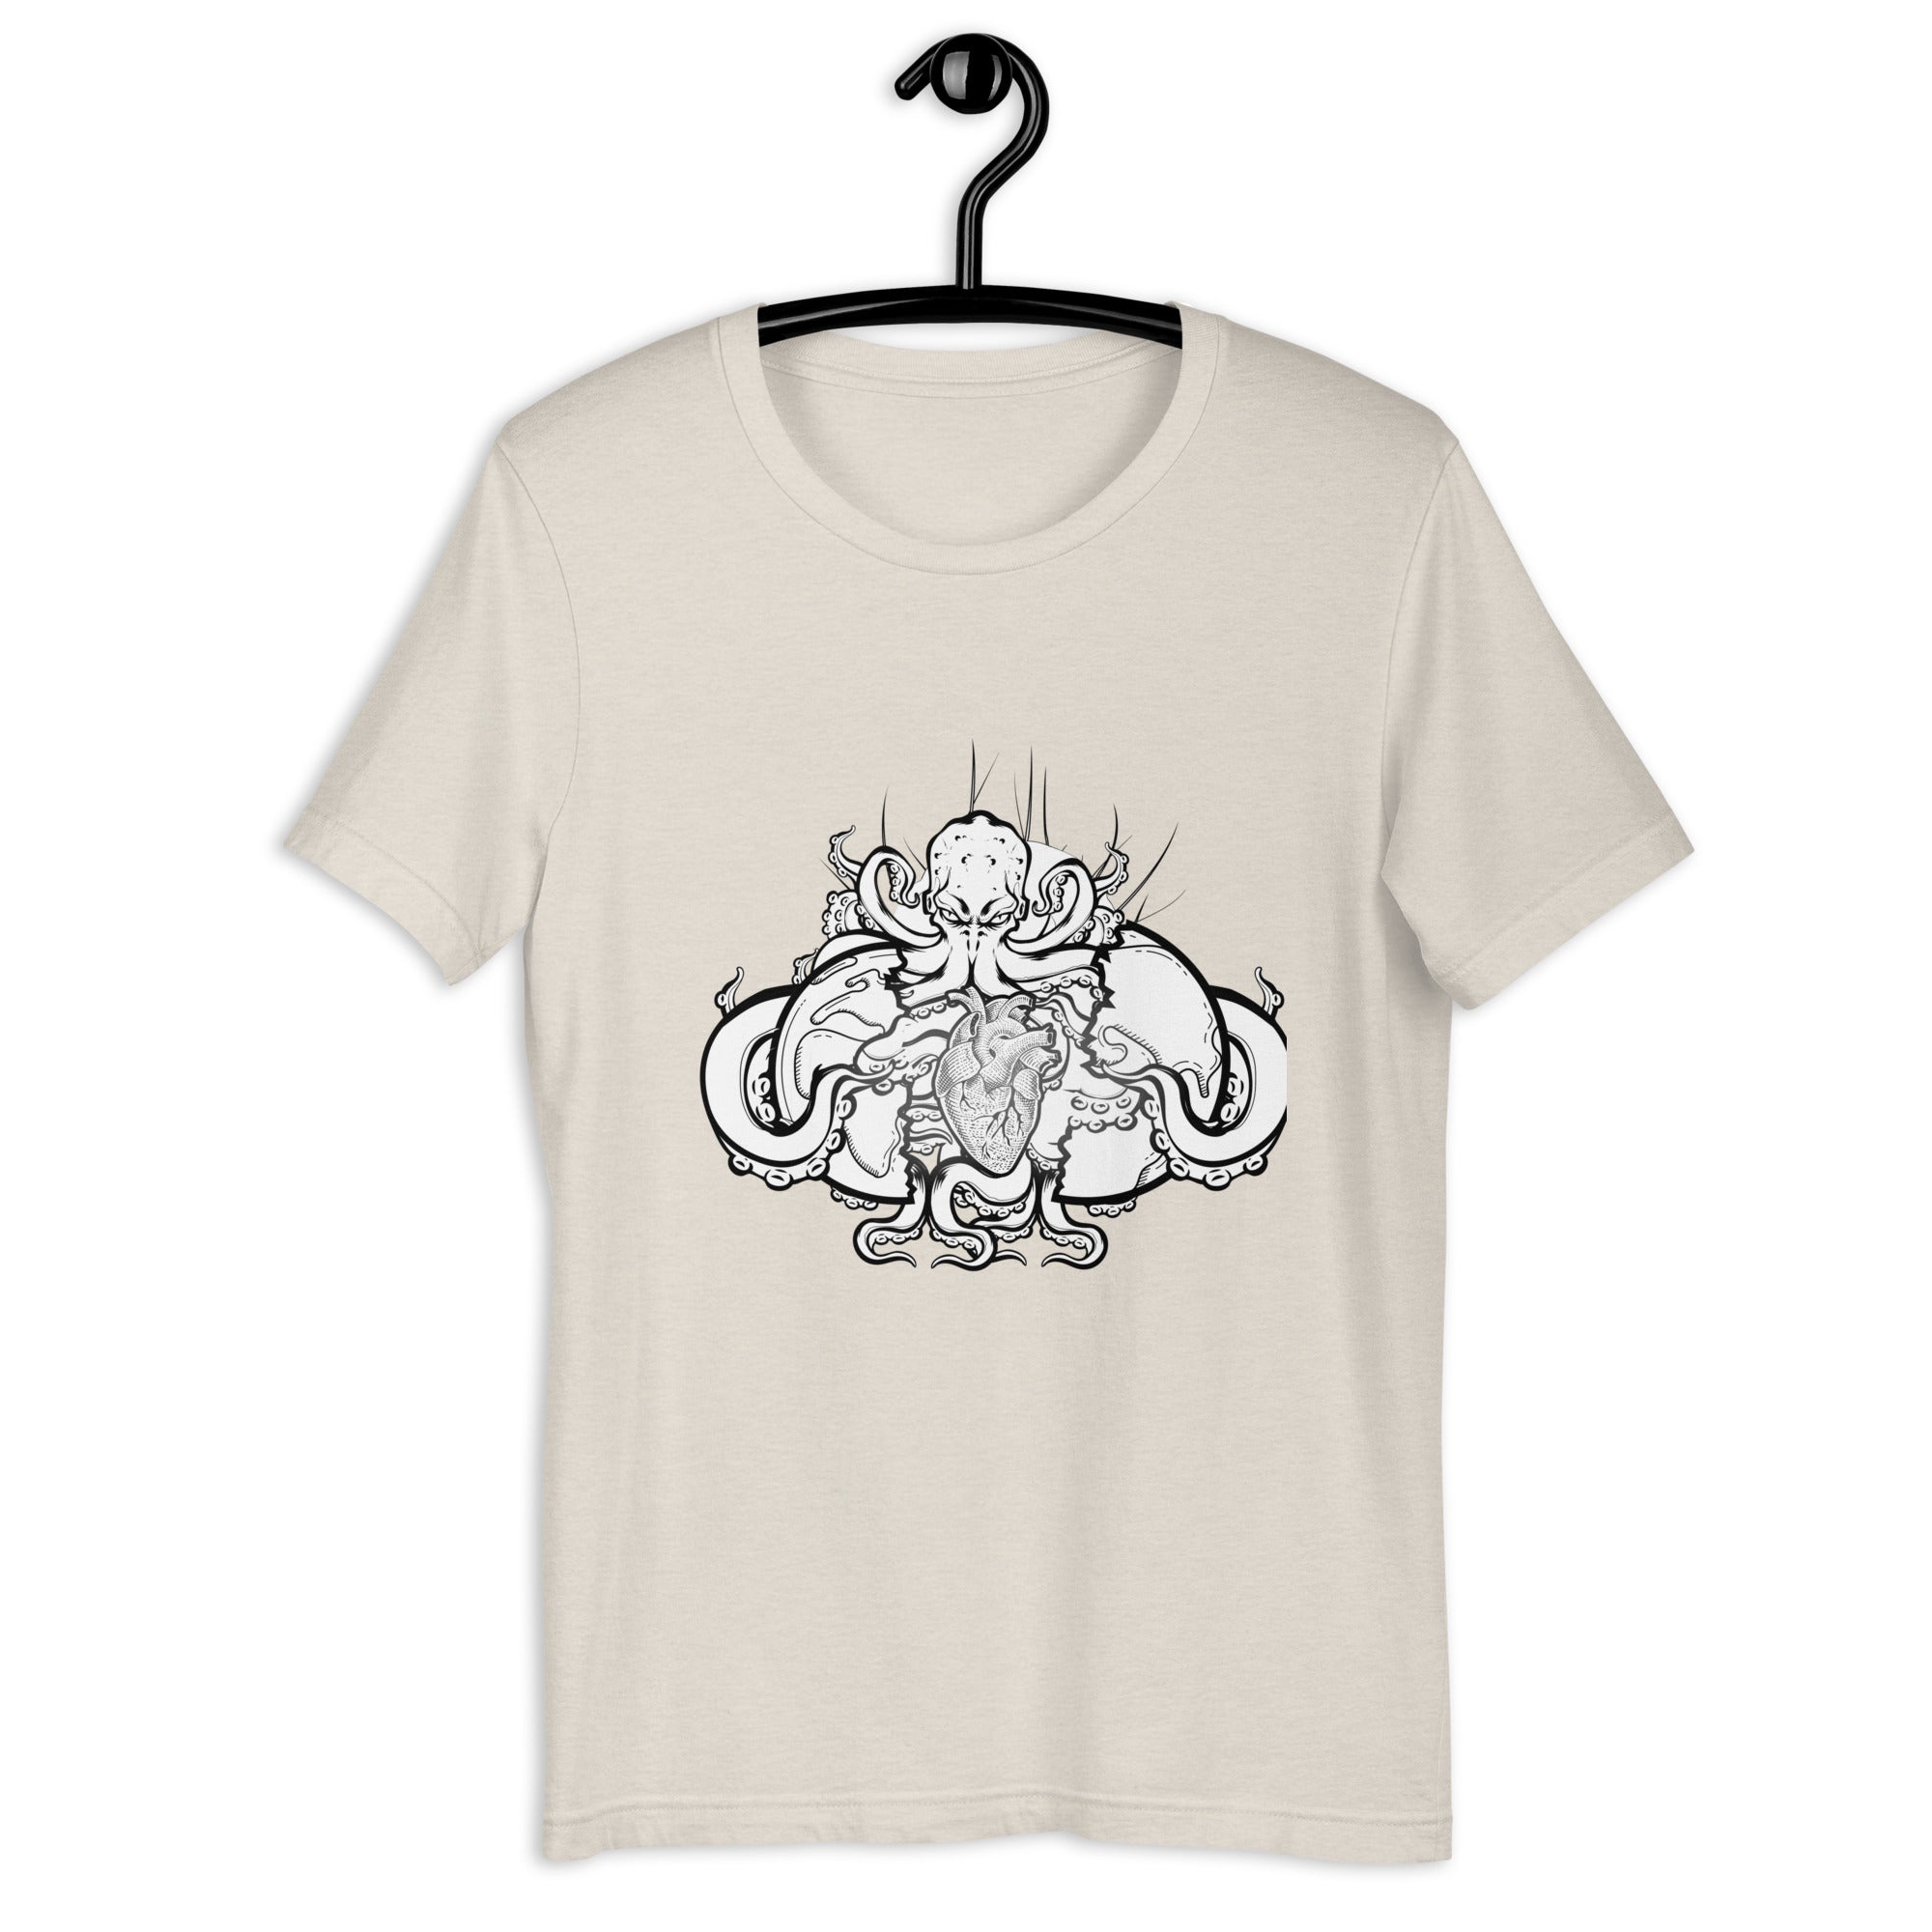 Cthulhu (B&W) - Unisex t-shirt